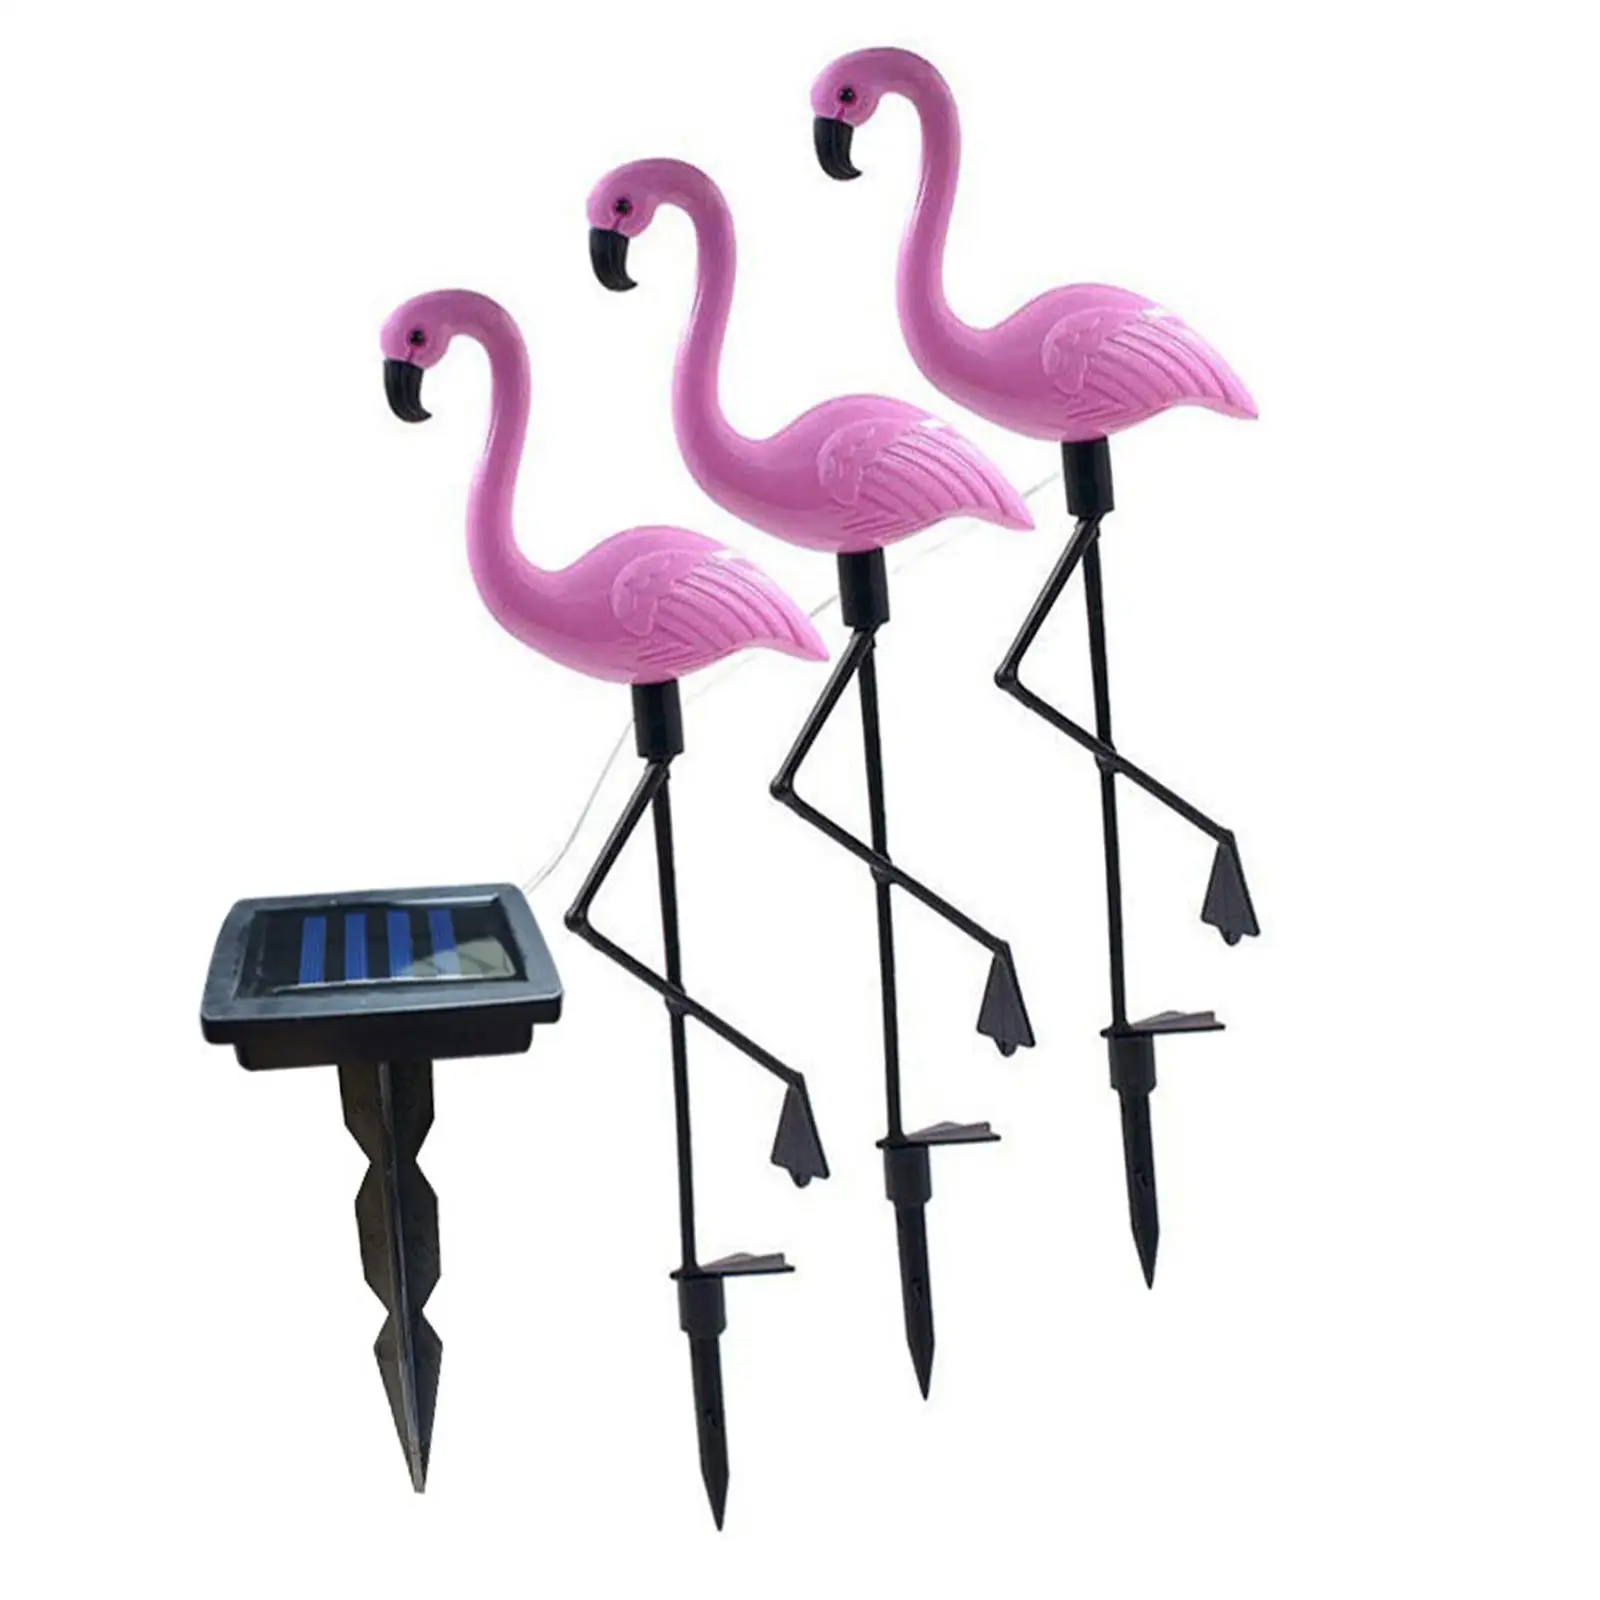 3 Pieces Flamingo Landscape Light Solar Power for Outdoor Patio Christams